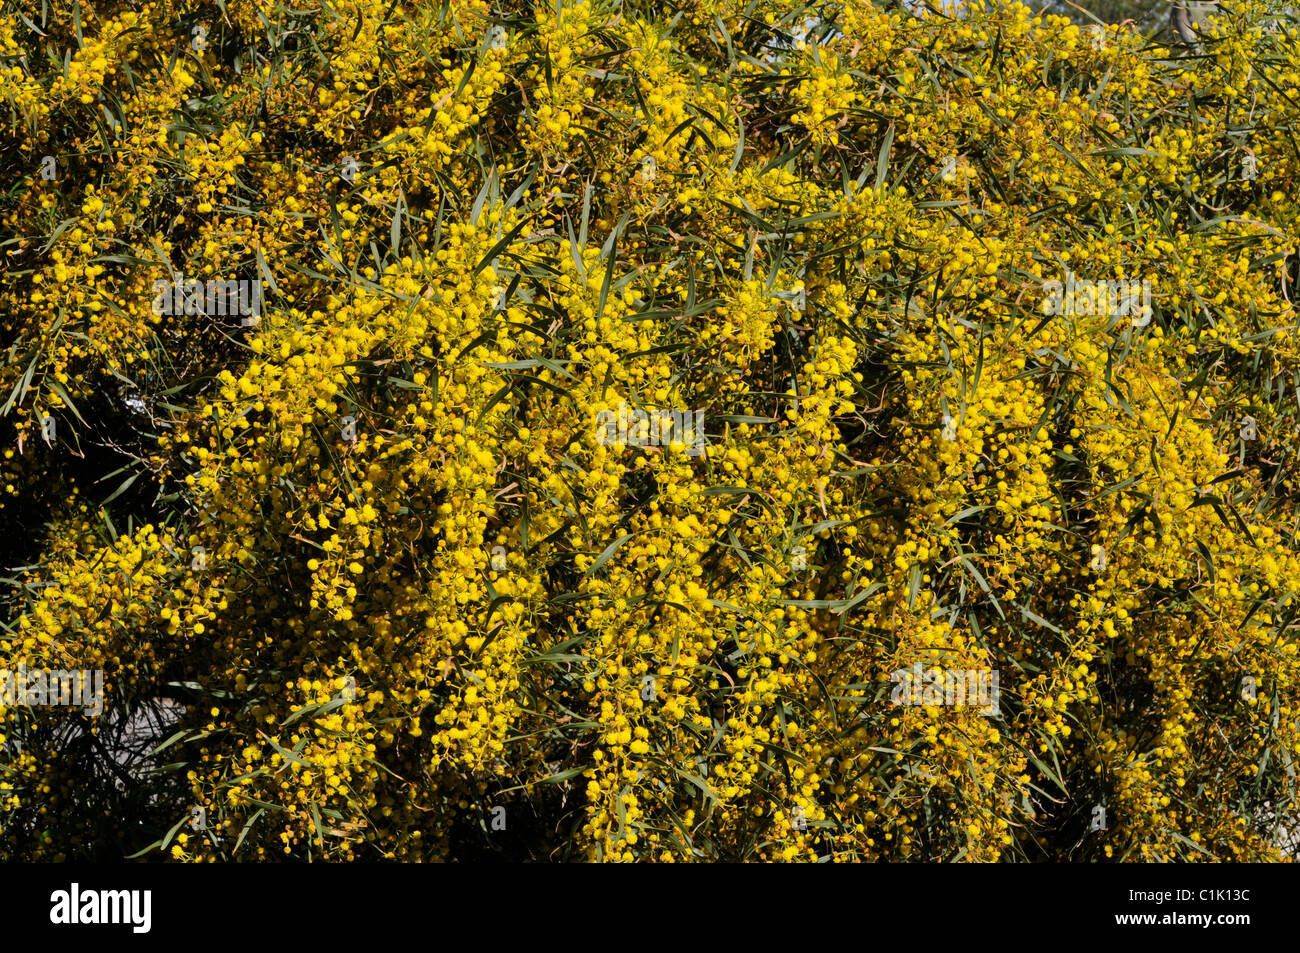 Flowering Acacia saligna or Golden Wattle tree Stock Photo